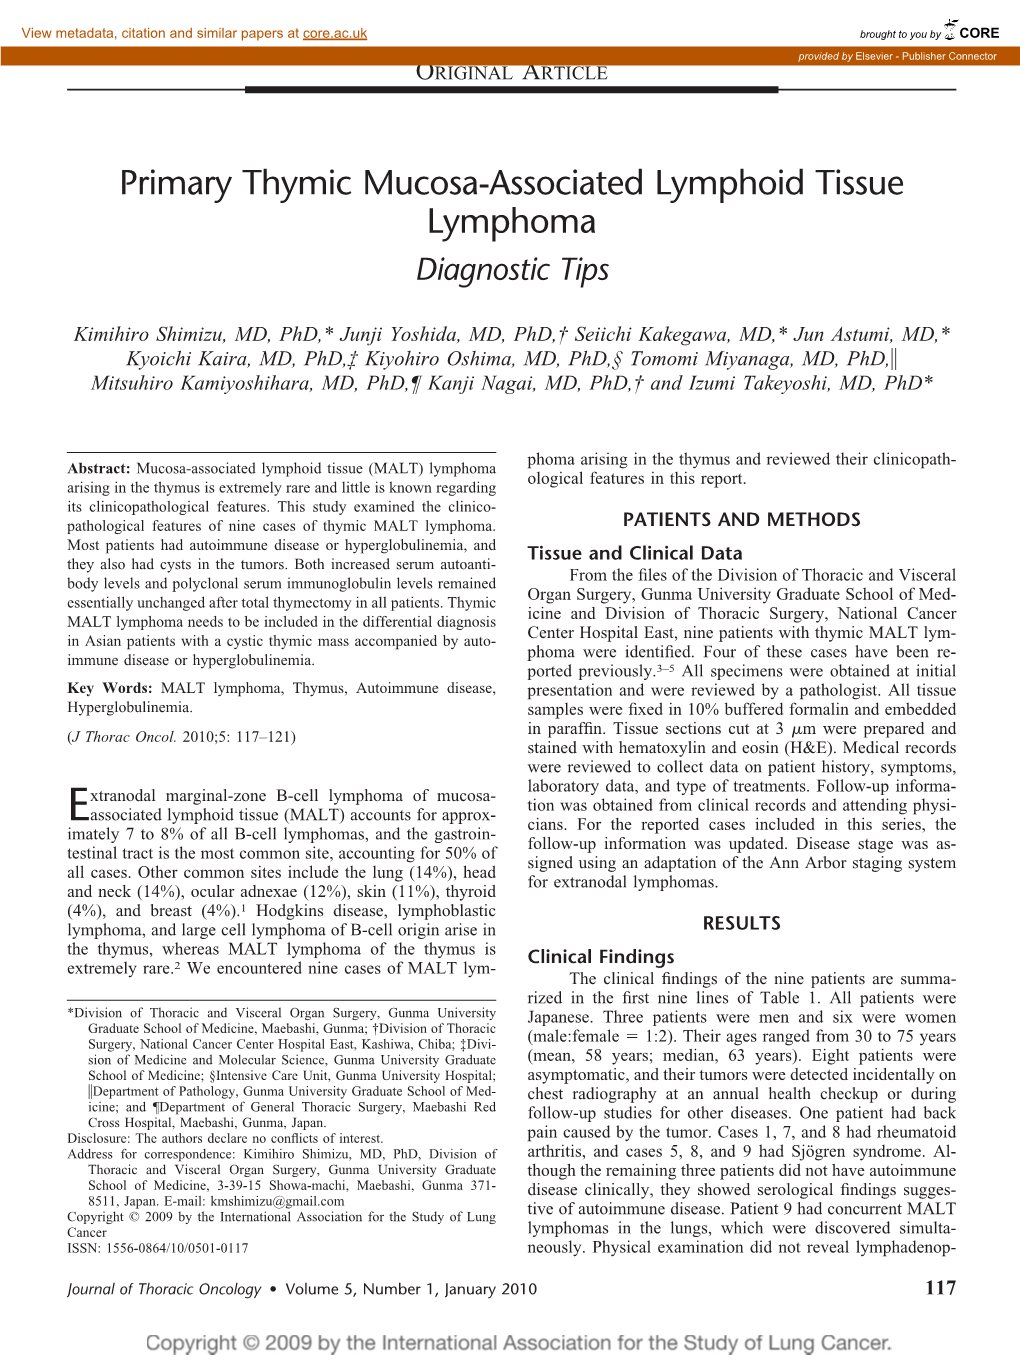 Primary Thymic Mucosa-Associated Lymphoid Tissue Lymphoma: Diagnostic Tips